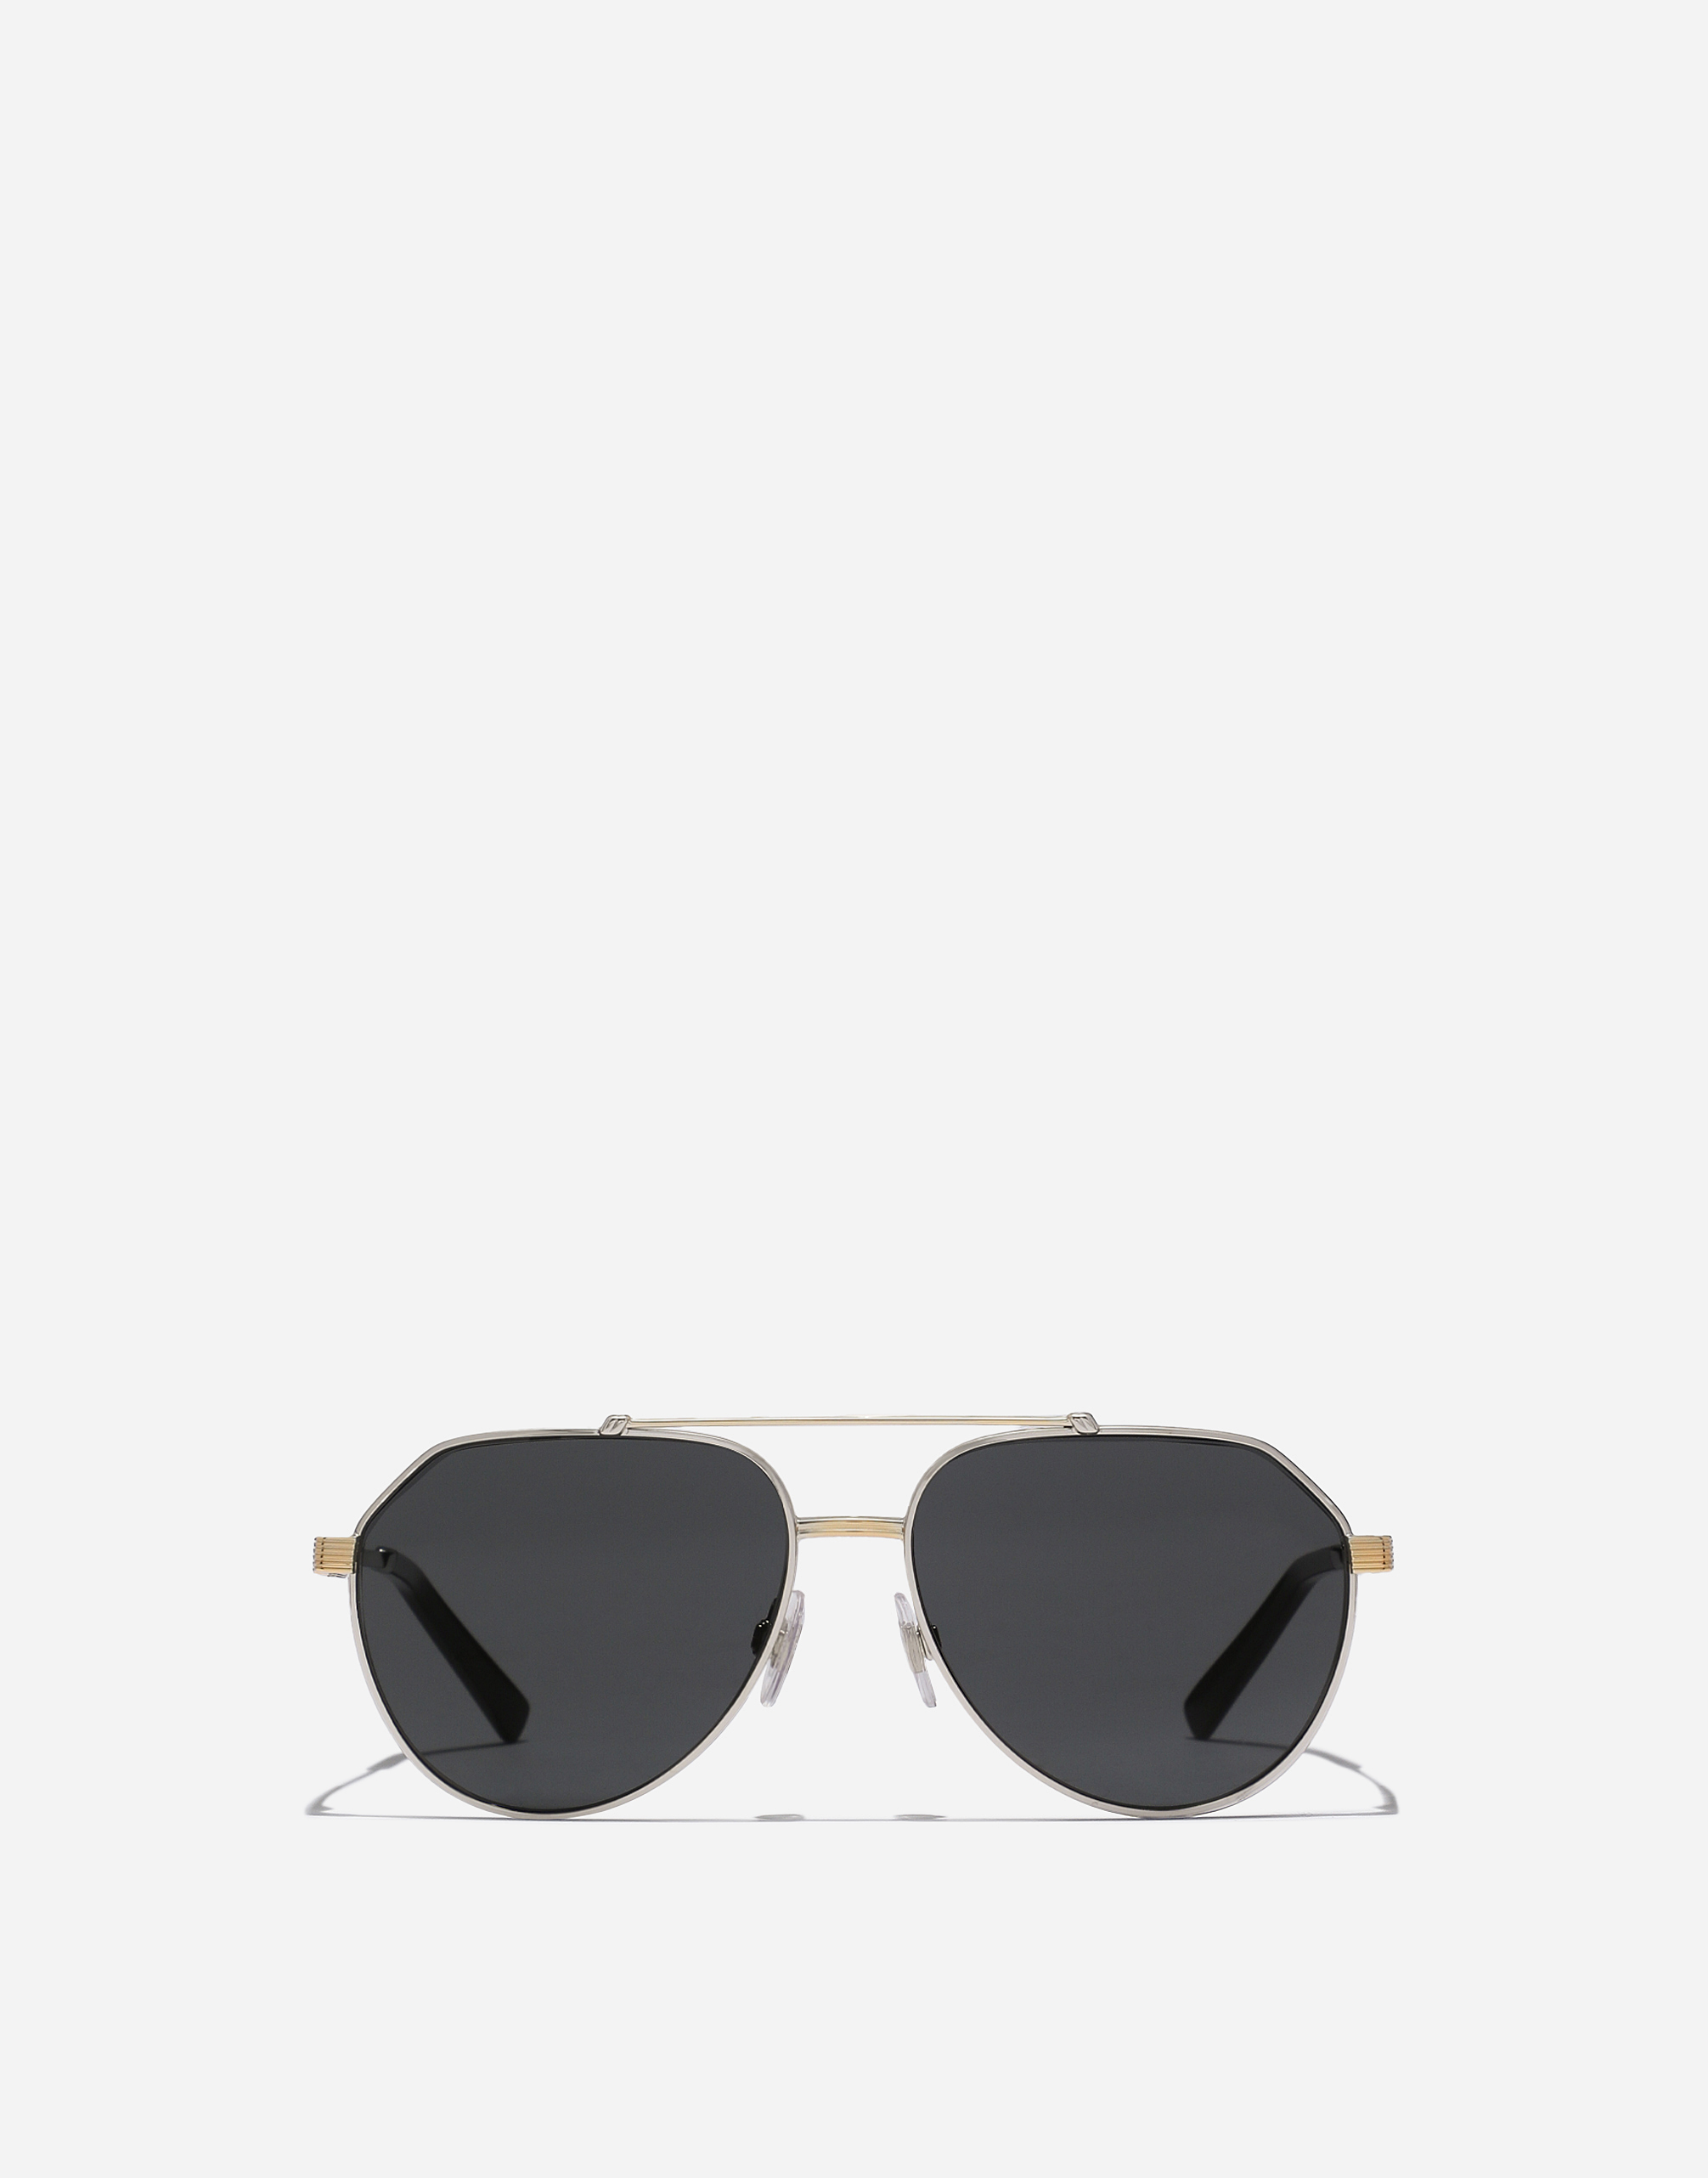 Gros Grain sunglasses in Black